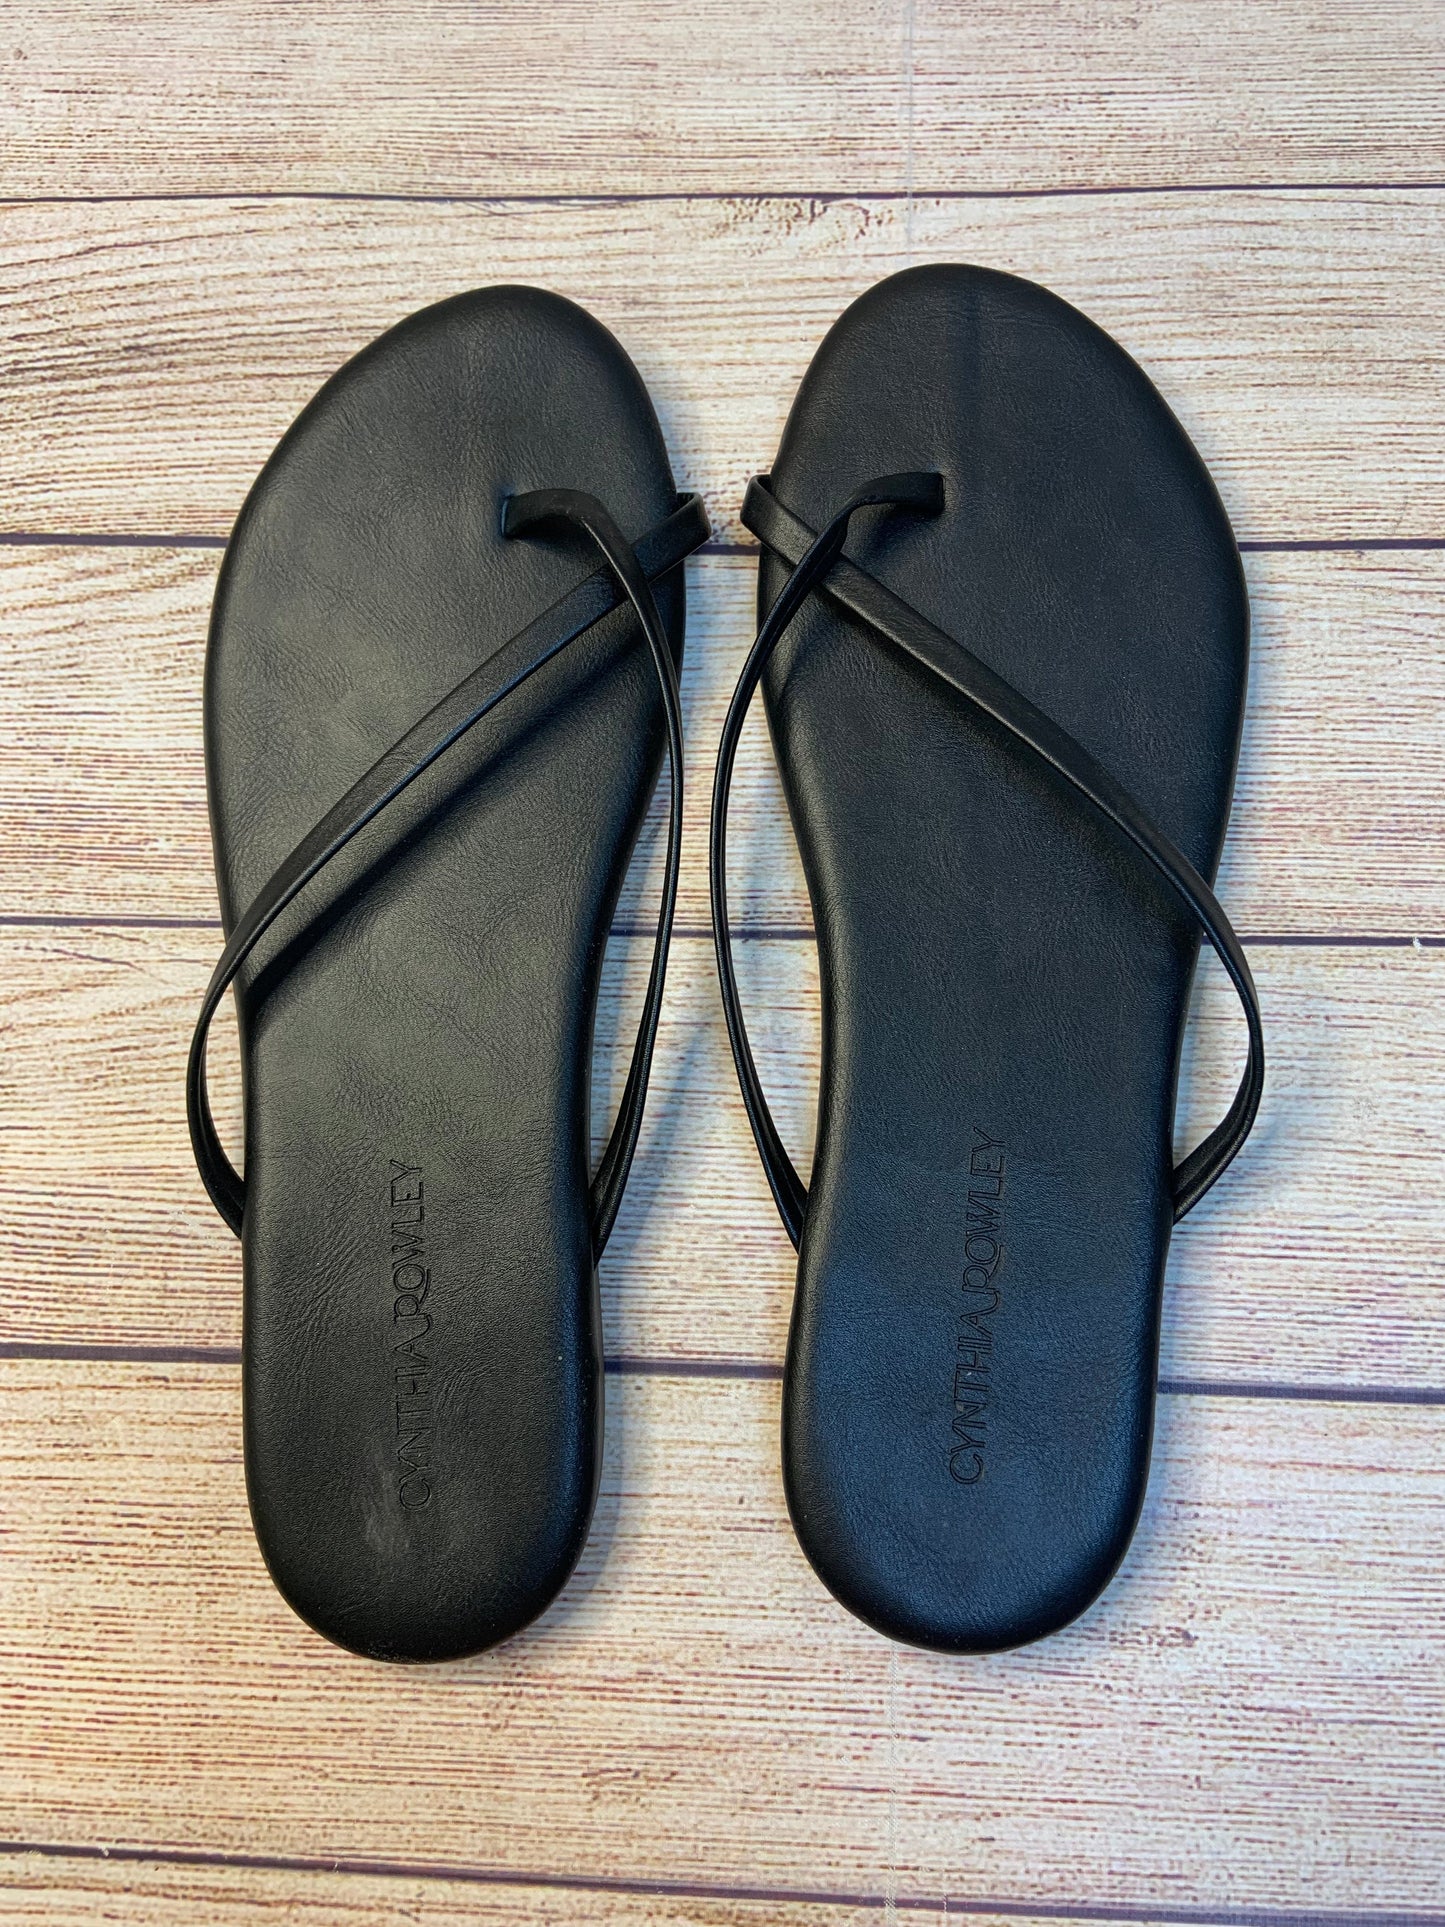 Sandals Flip Flops By Cynthia Rowley  Size: 10